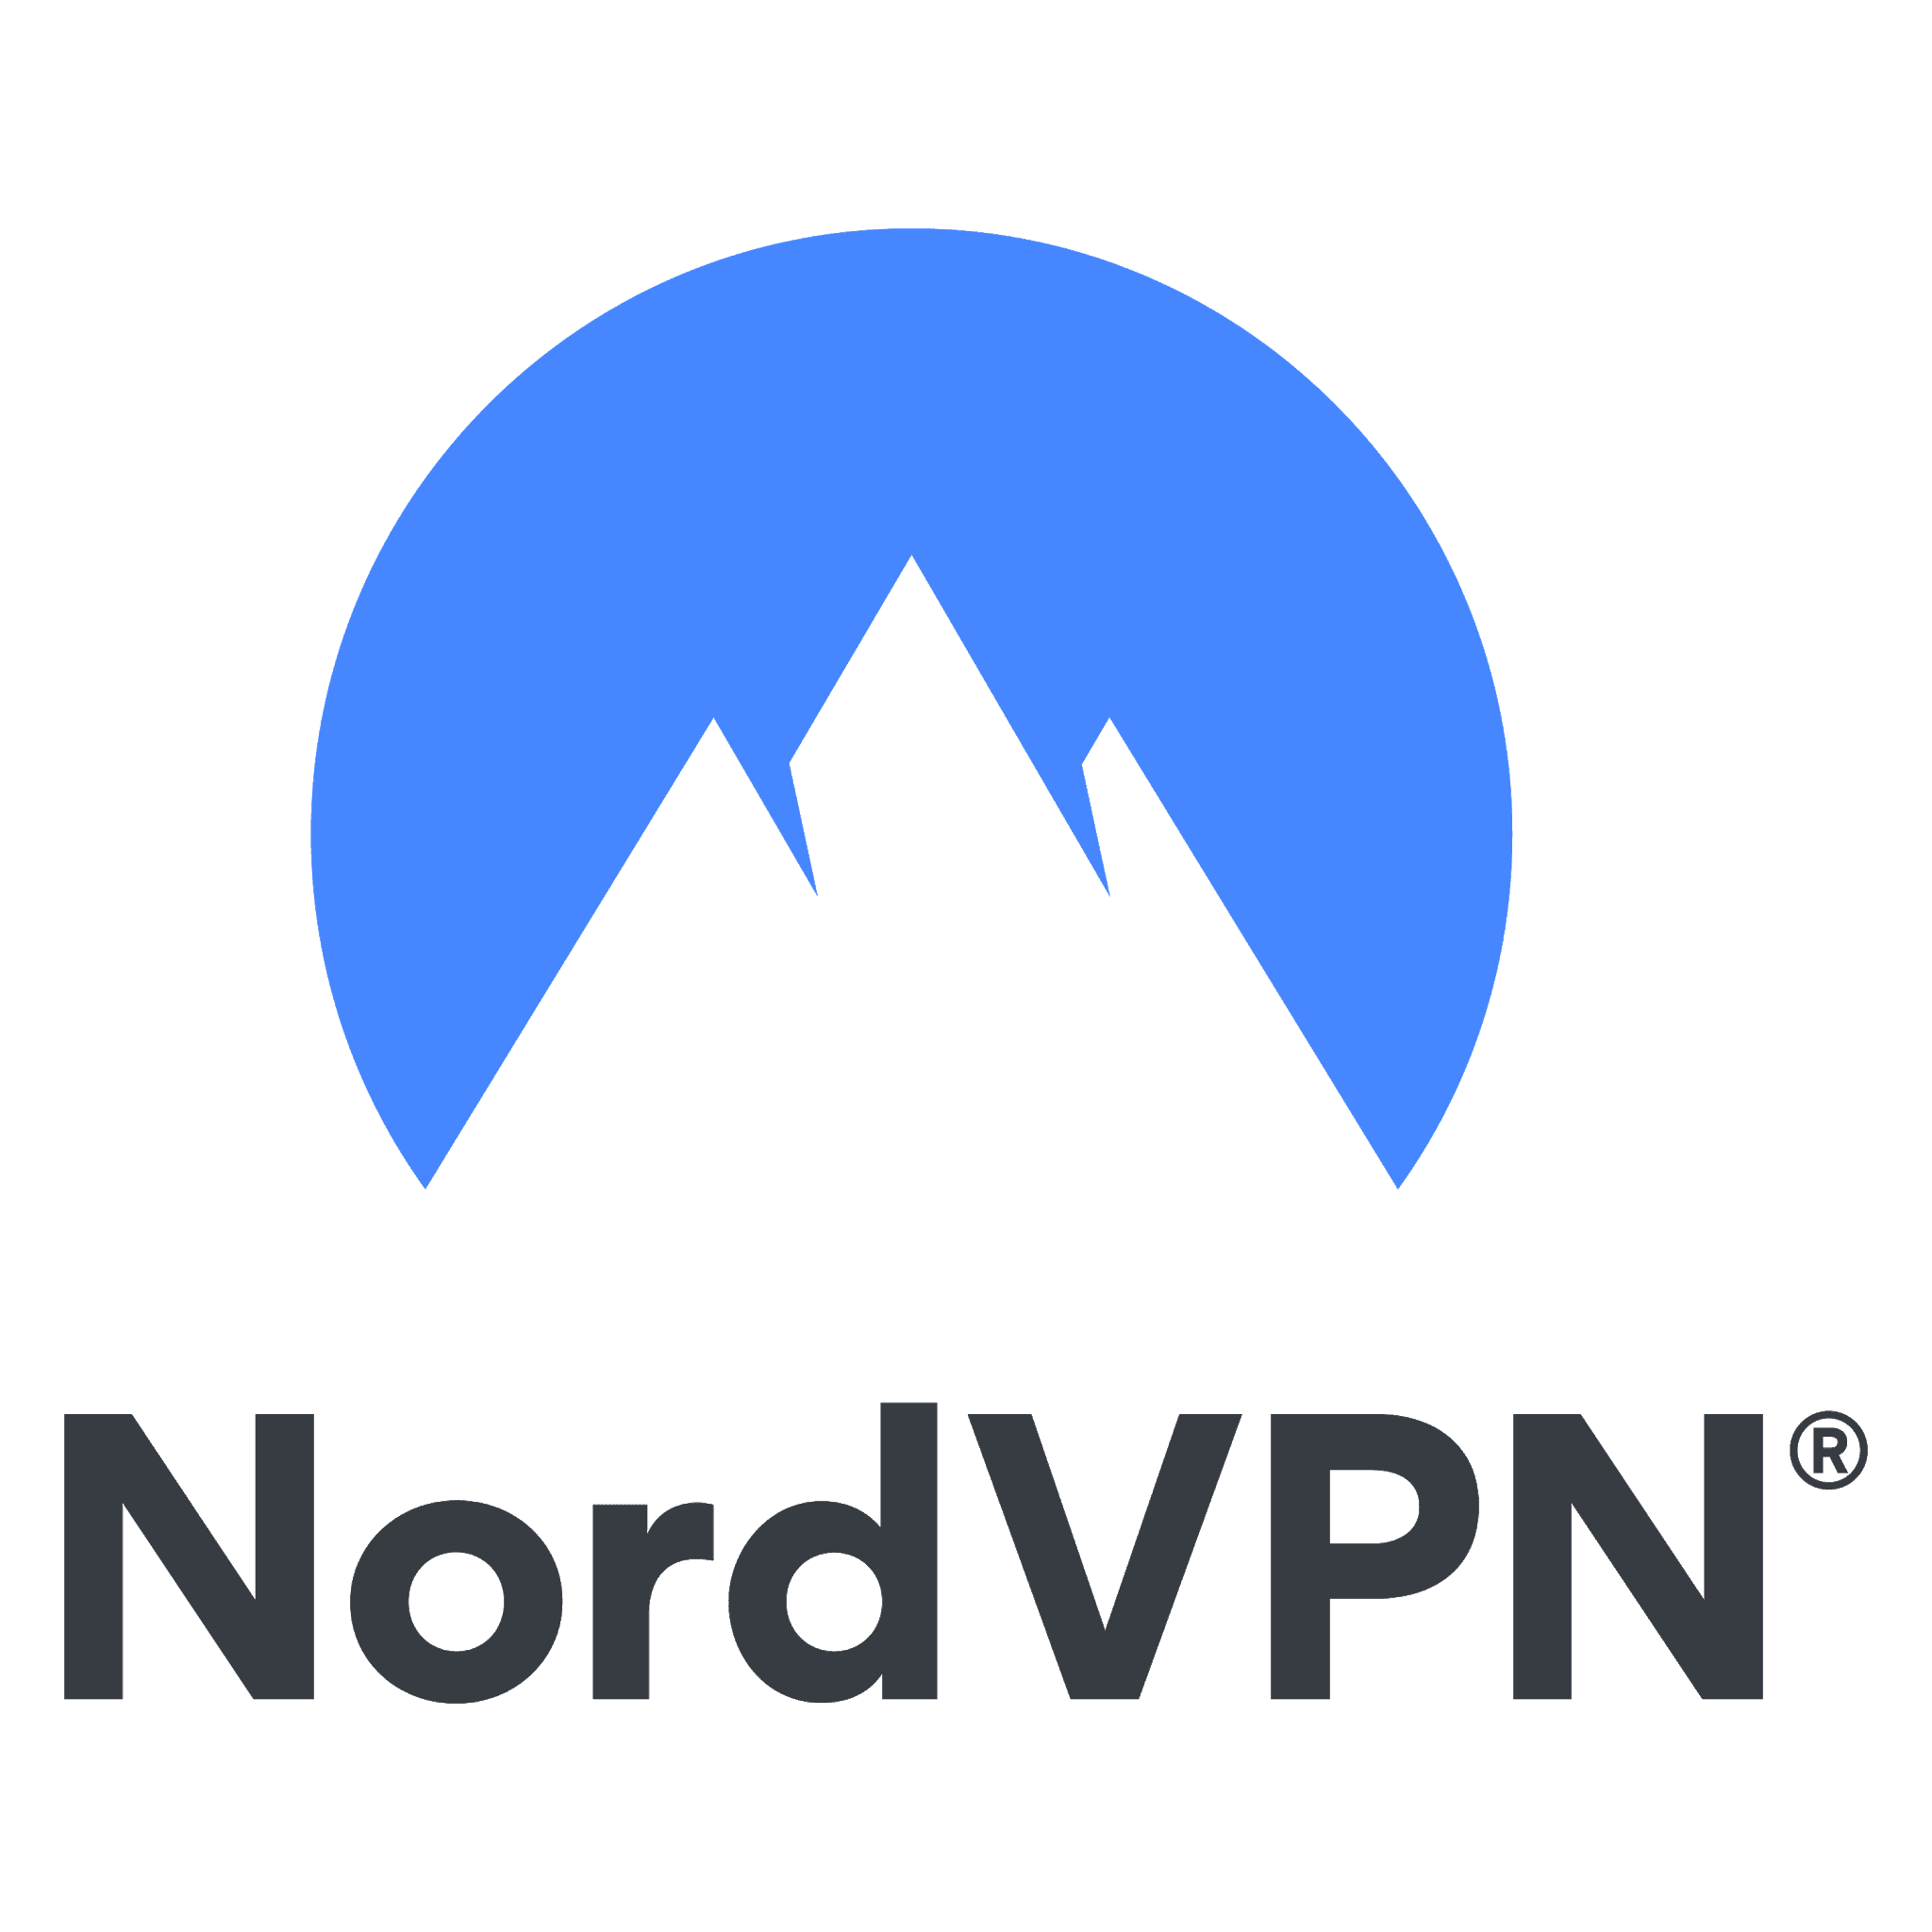 nordvpn full version download